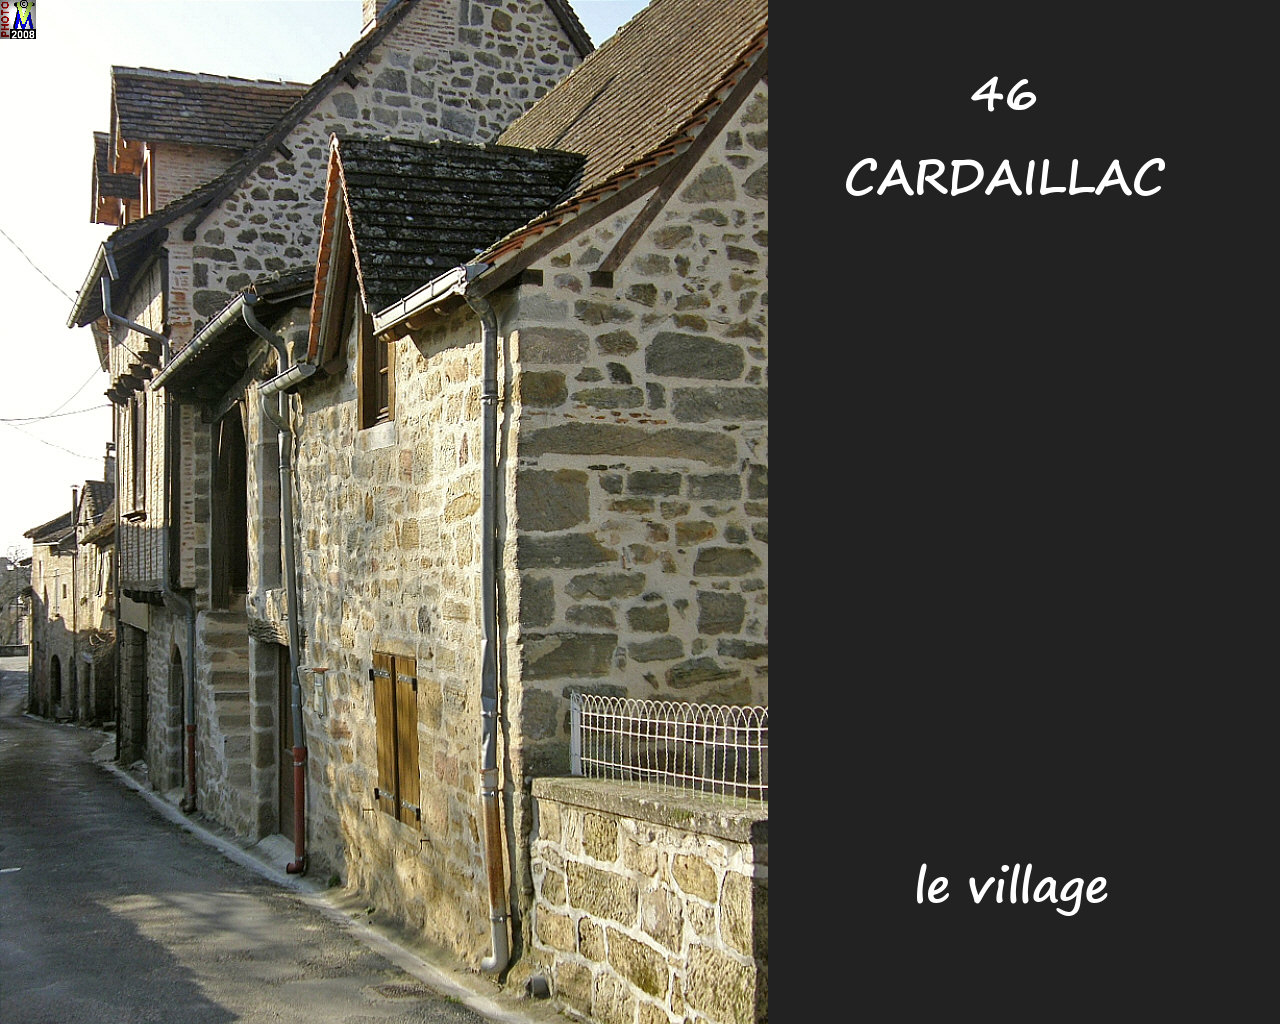 46CARDAILLAC_village_232.jpg